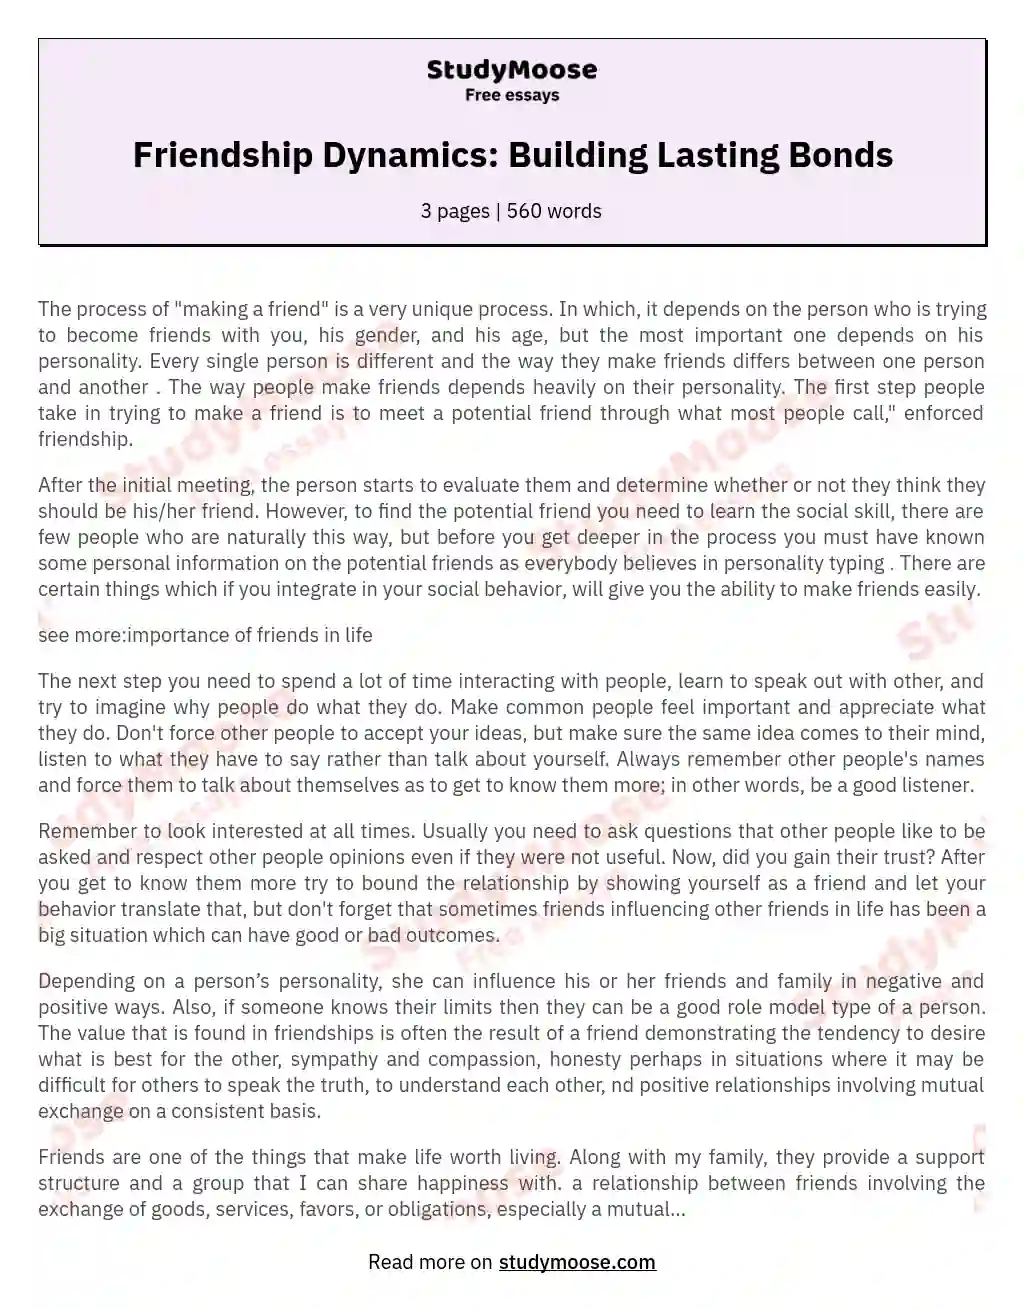 Friendship Dynamics: Building Lasting Bonds essay